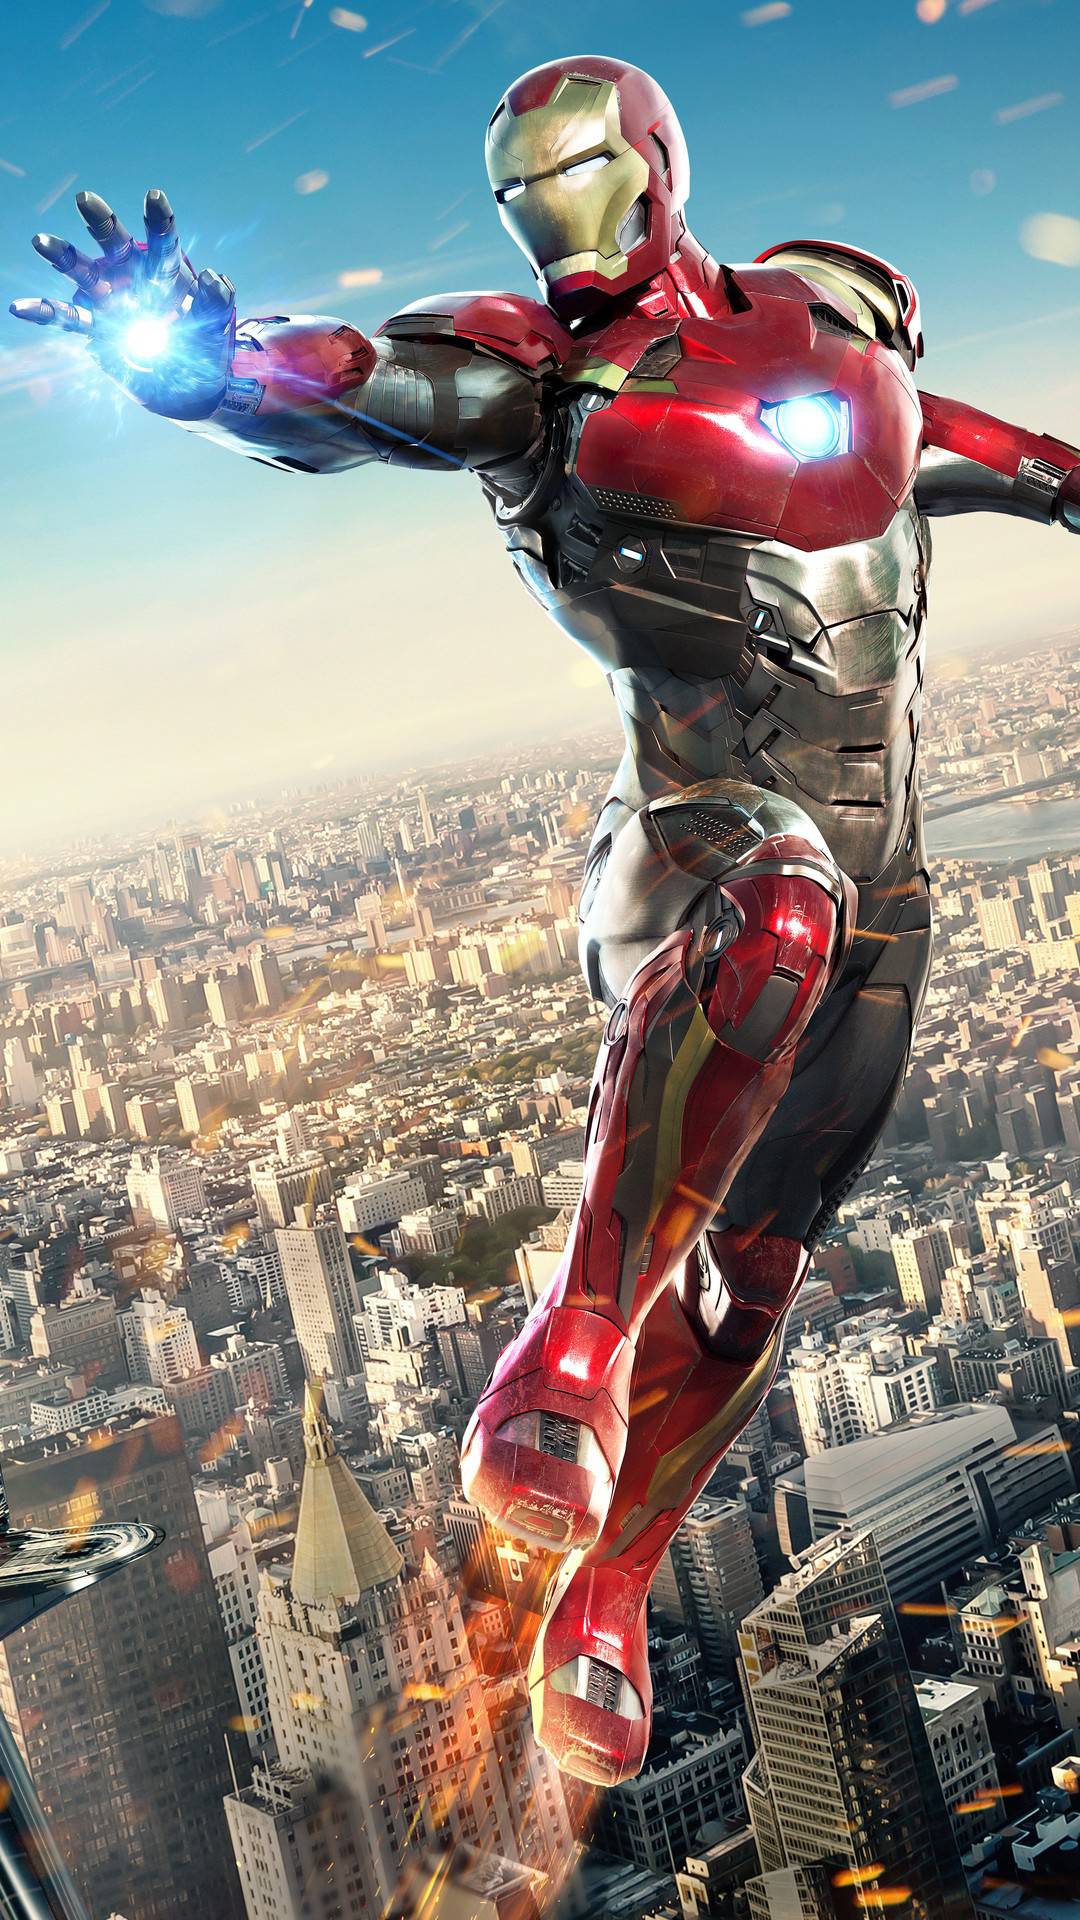 Iron Man Superhero IPhone Wallpaper - IPhone Wallpapers : iPhone Wallpapers